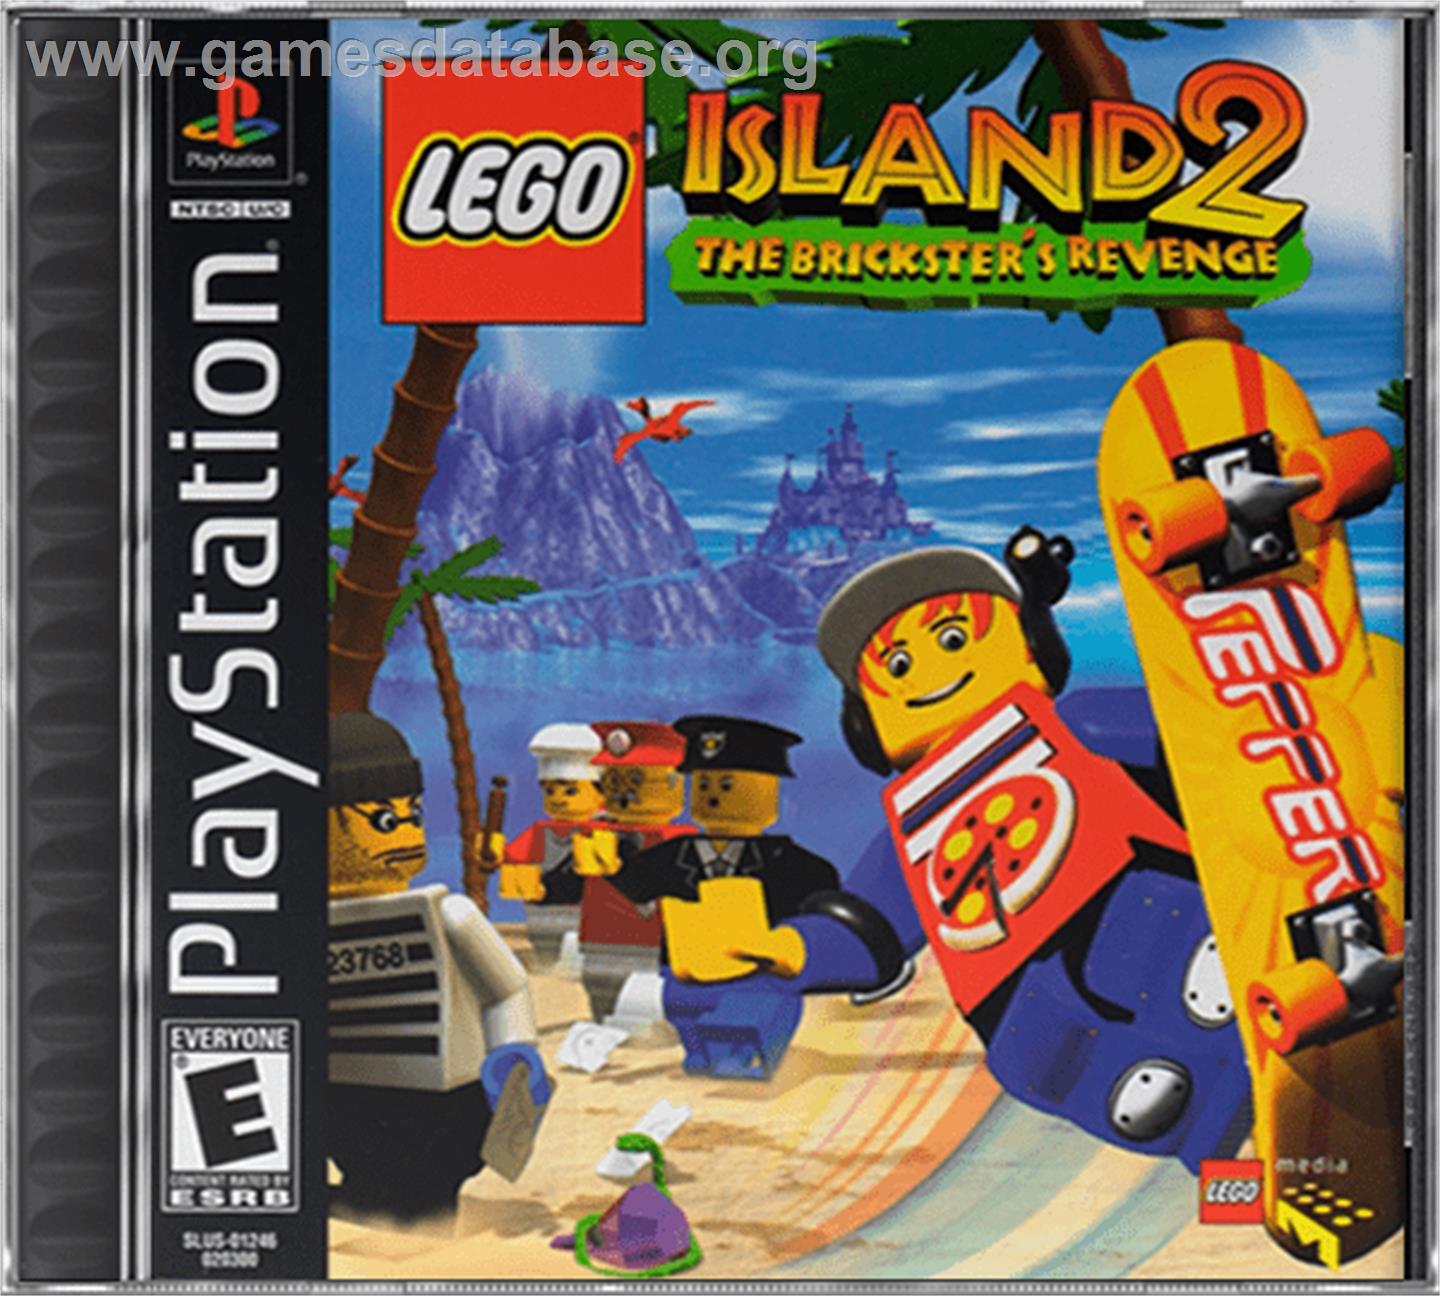 LEGO Island 2: The Brickster's Revenge - Sony Playstation - Artwork - Box